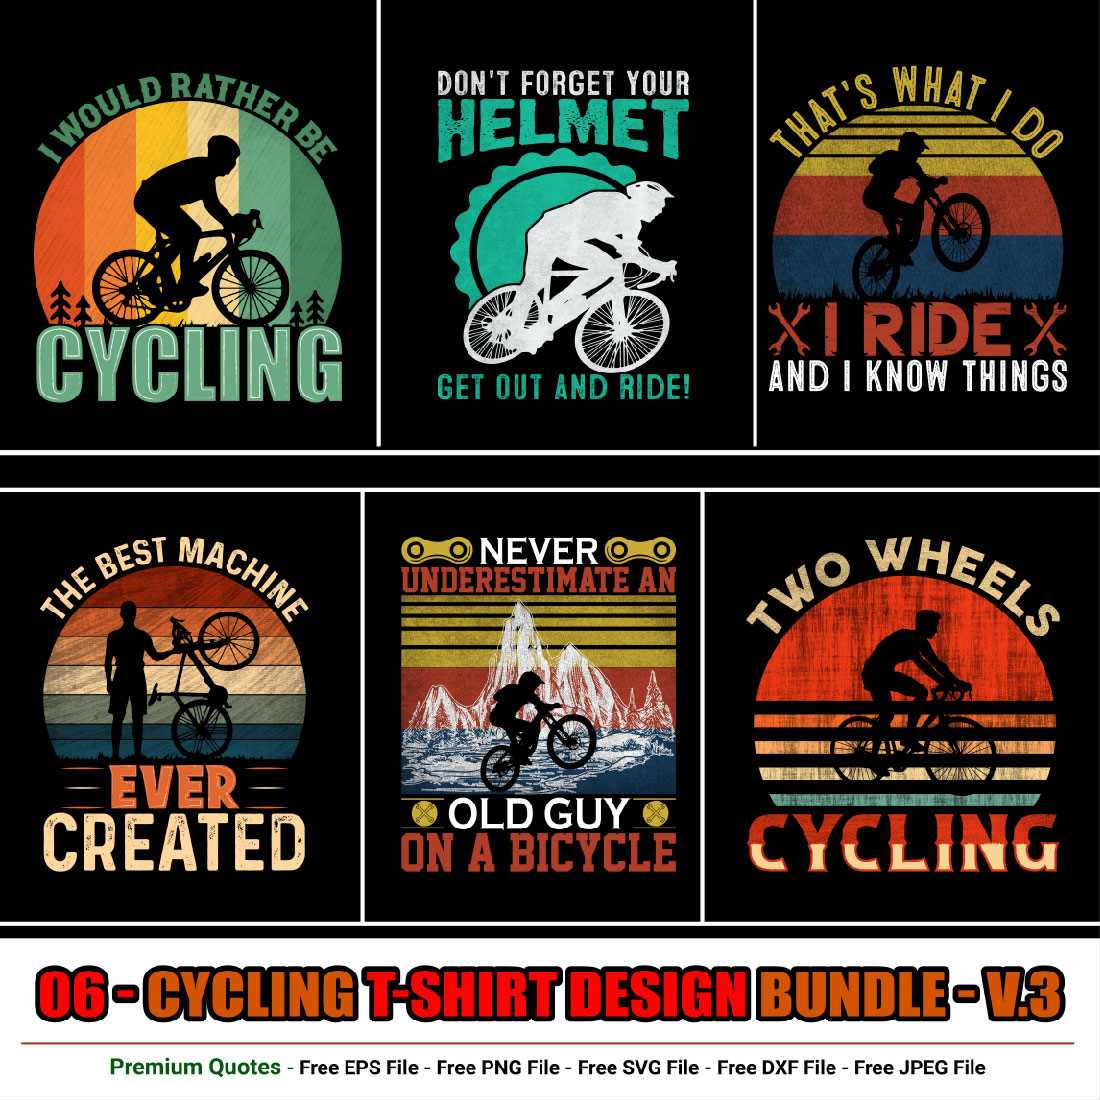 Cycling t-shirt design bundle preview image.